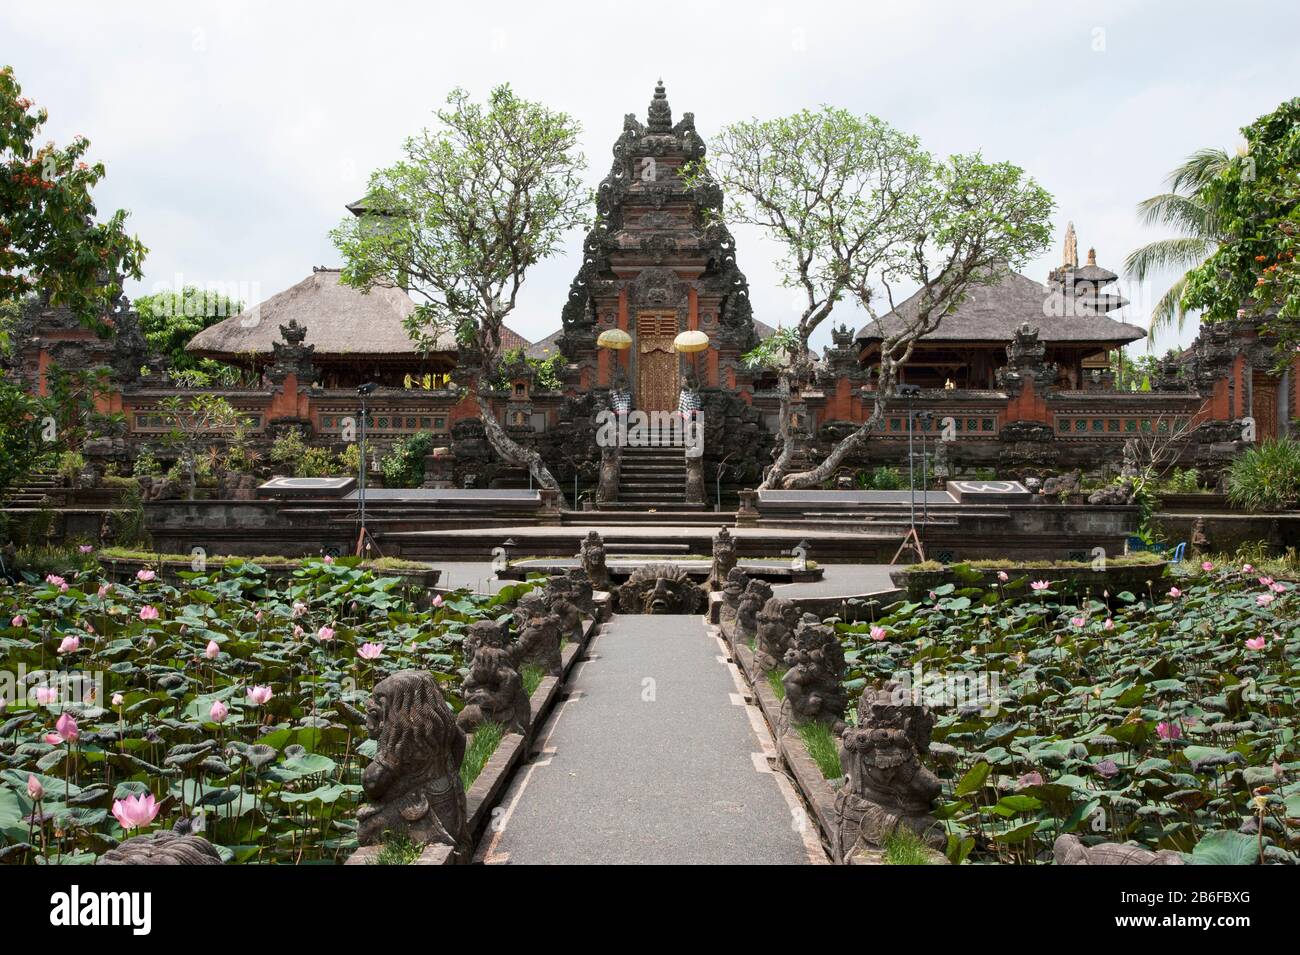 Facade of the Pura Taman Saraswati Temple, Ubud, Bali, Indonesia Stock Photo